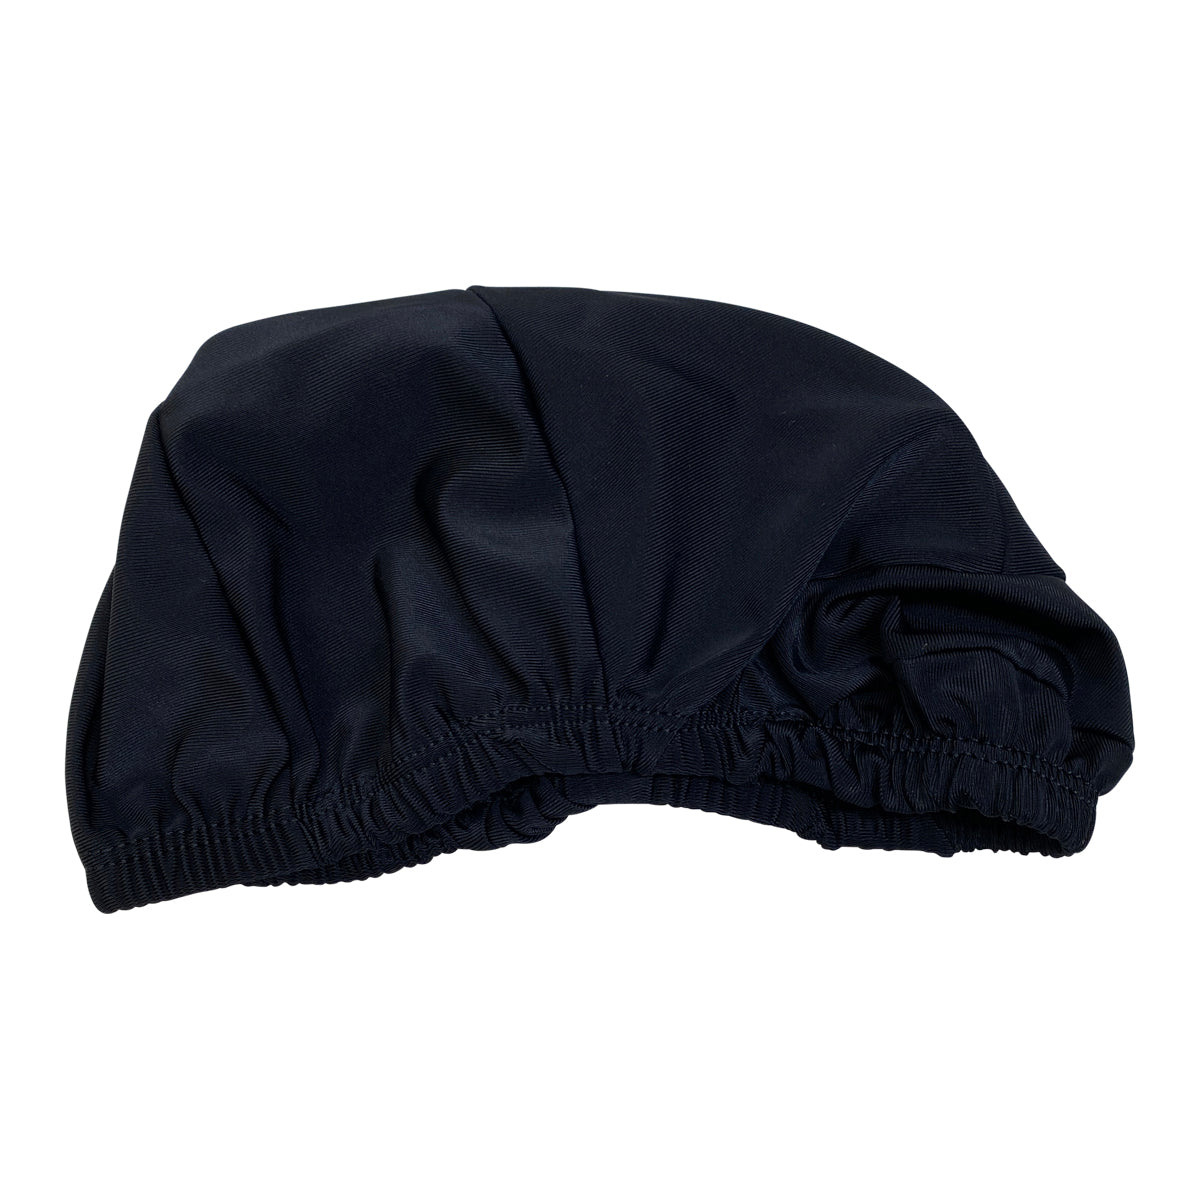 Gatsby Stretchy Helmet Cover in Black